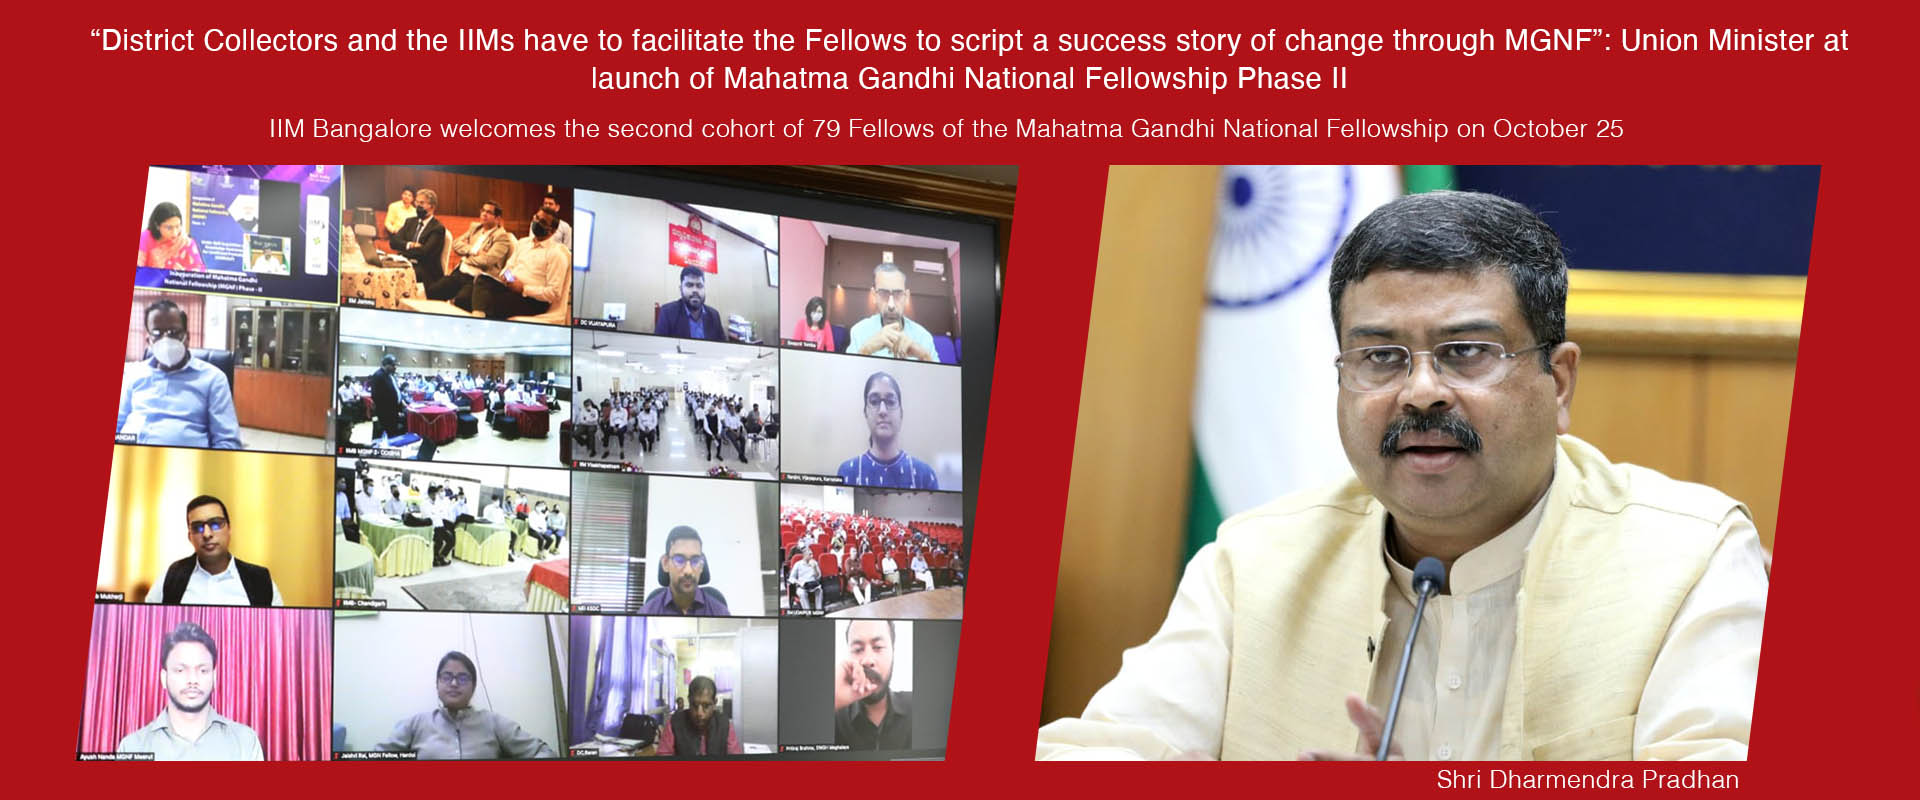 Union Minister at launch of Mahatma Gandhi National Fellowship Phase II